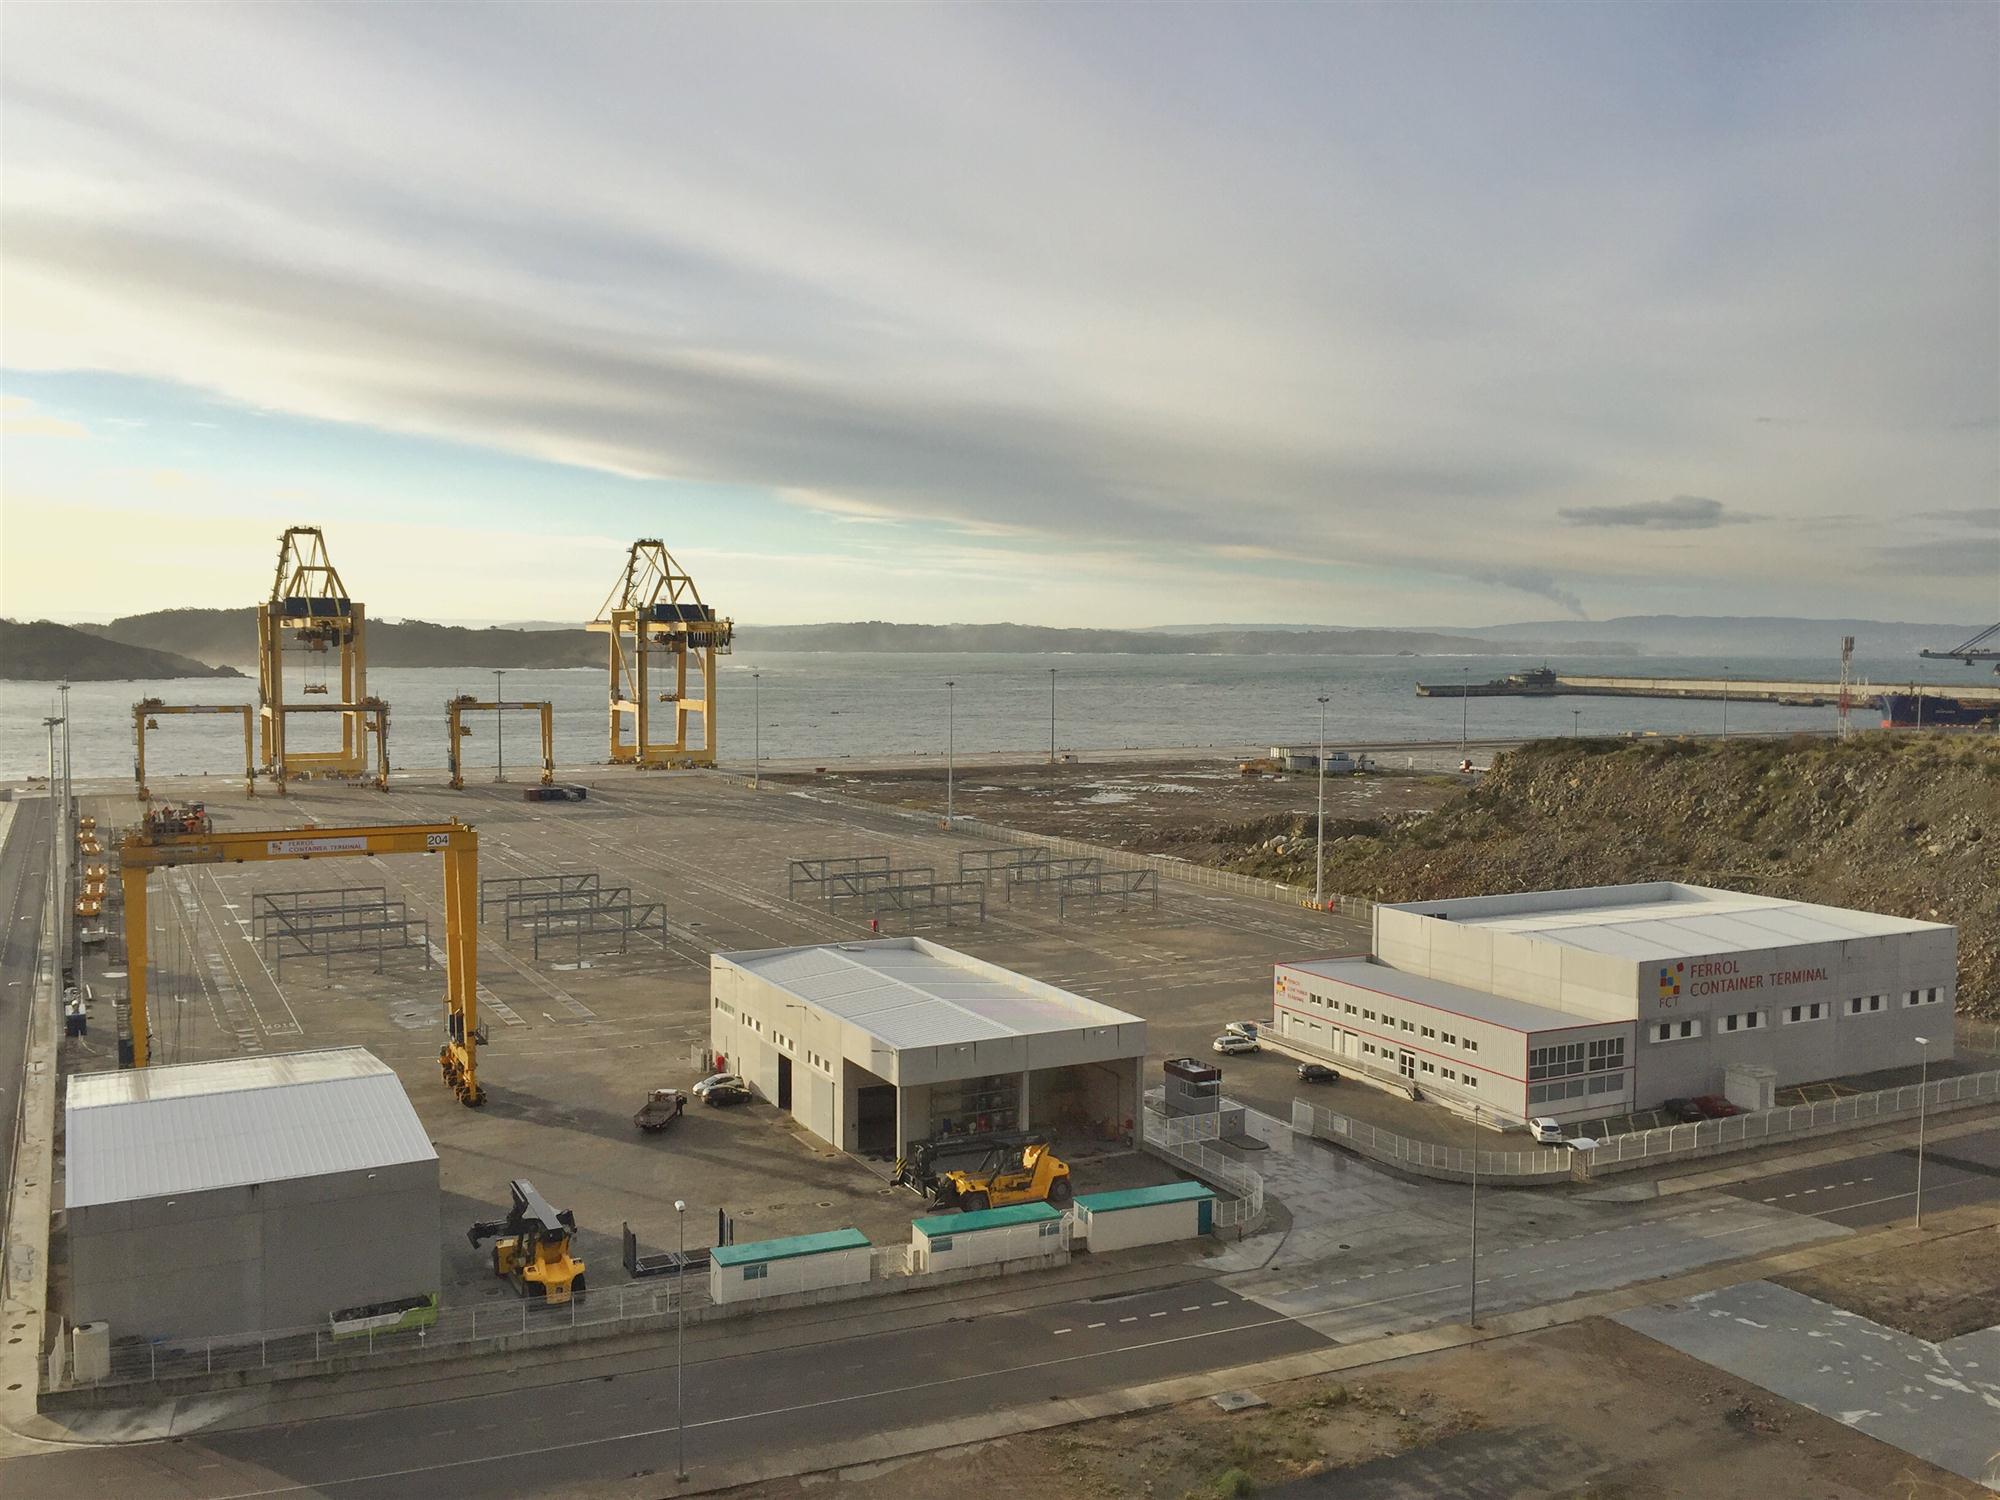 Self Photos / Files - Ferrol Container Terminal